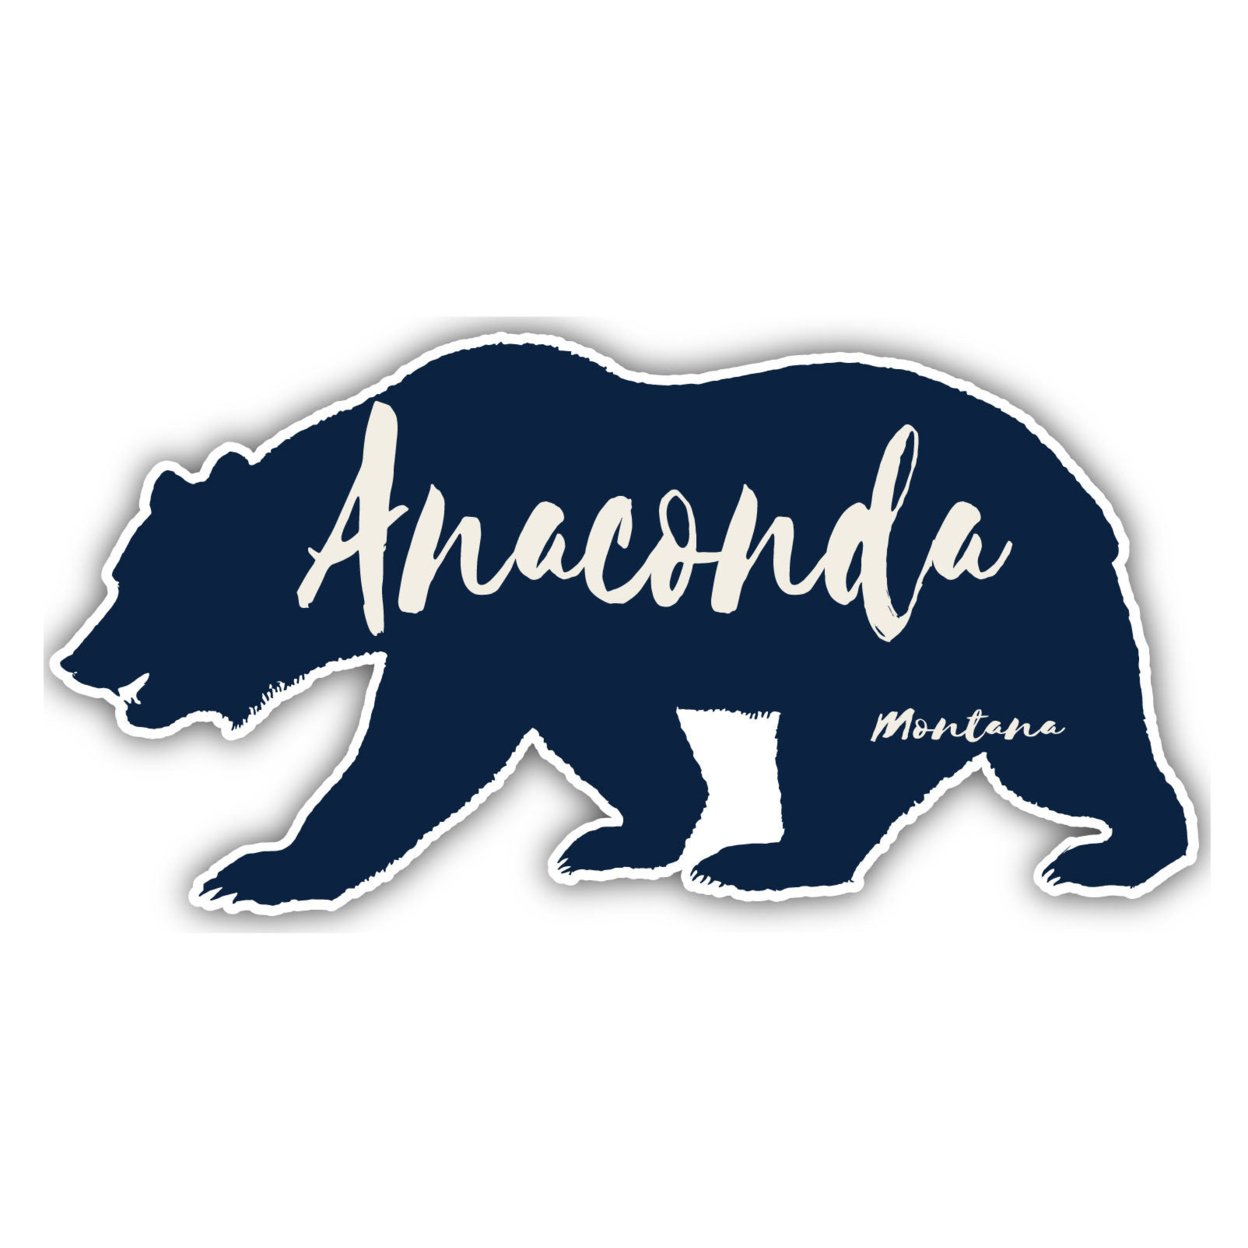 Anaconda Montana Souvenir Decorative Stickers (Choose Theme And Size) - Single Unit, 8-Inch, Bear